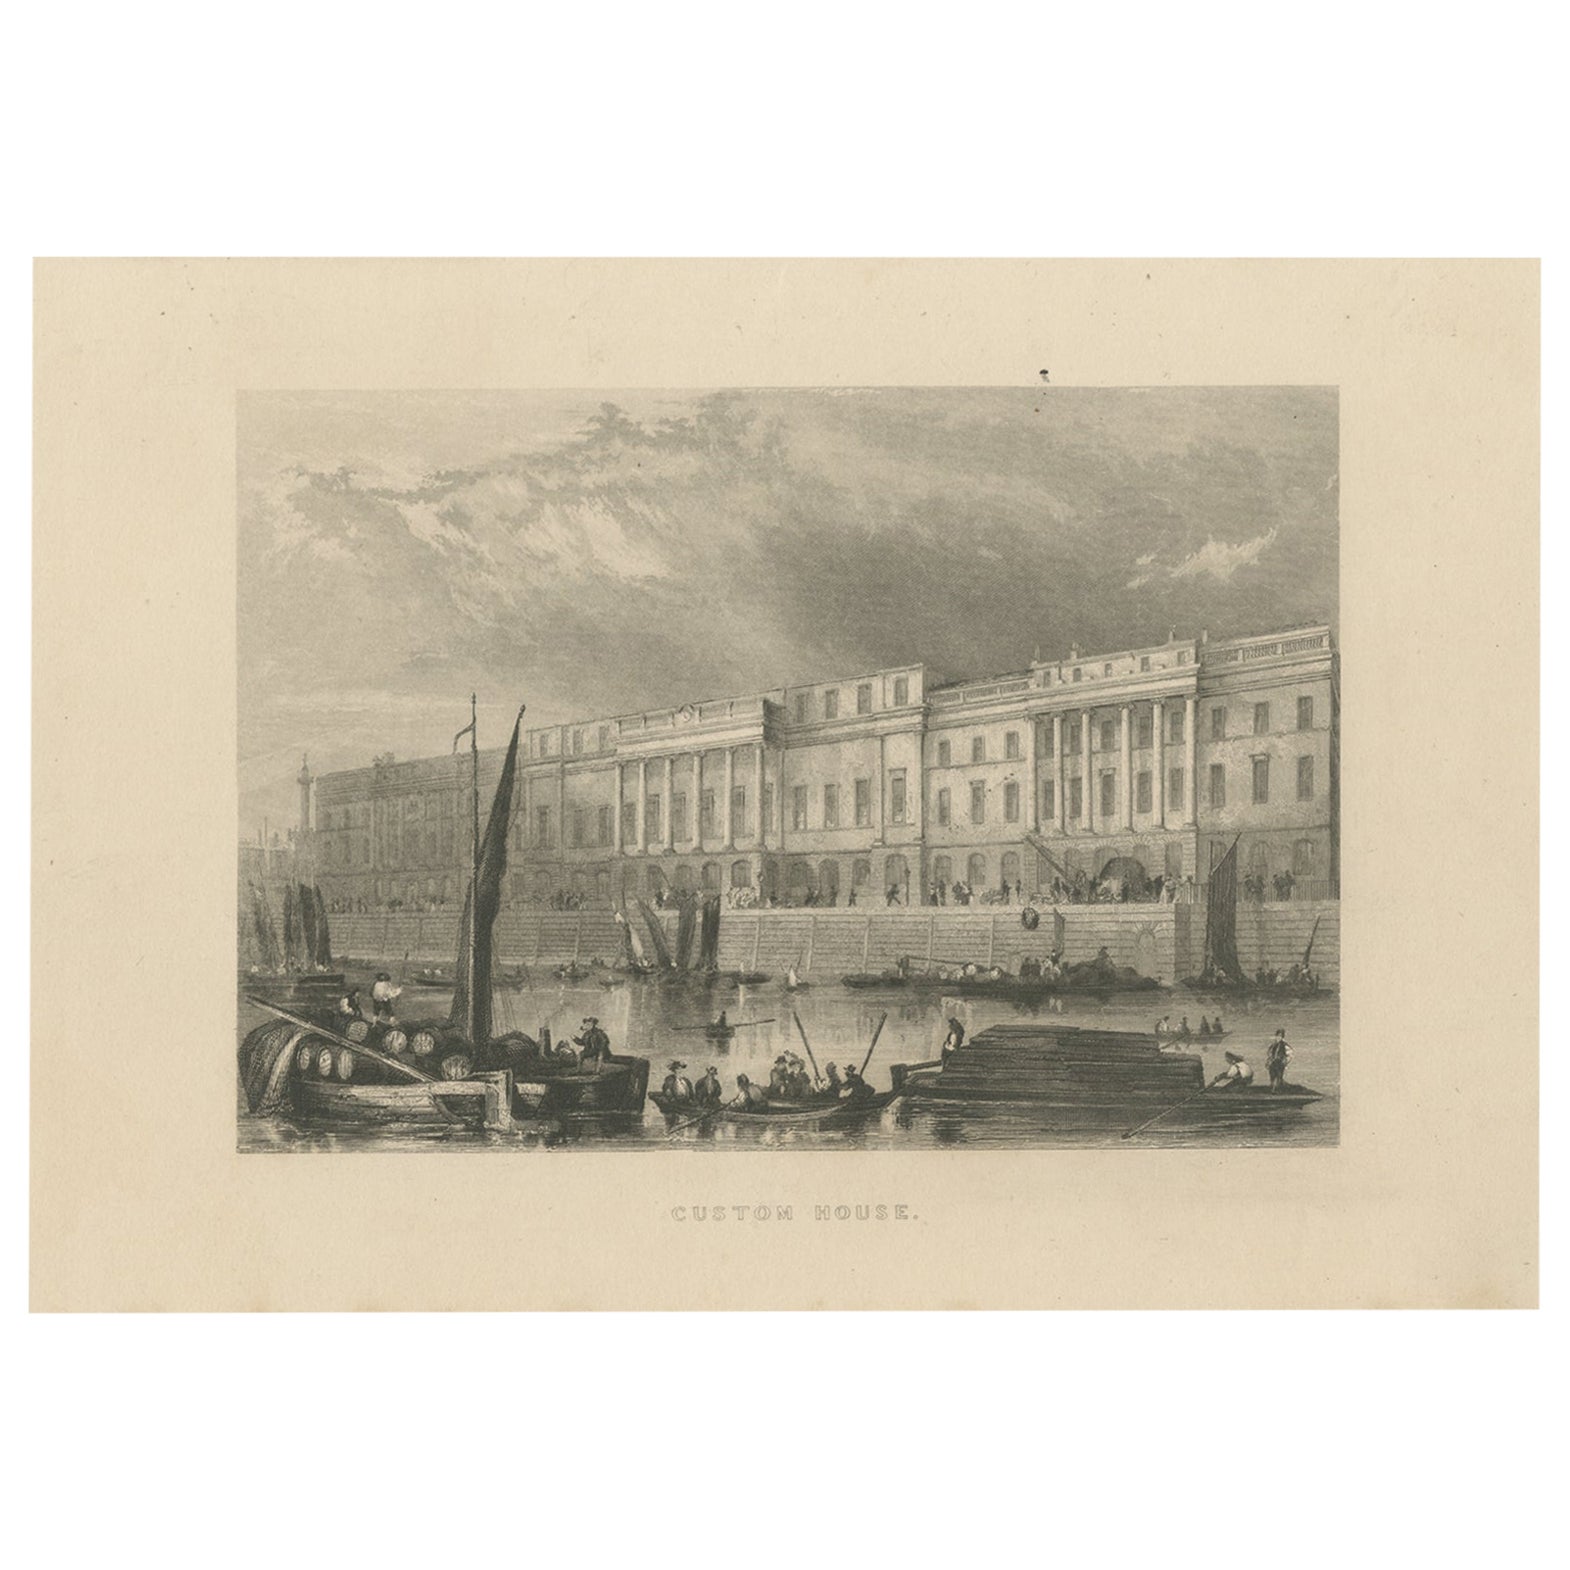 Impression ancienne de la Custom House of London, c.1840